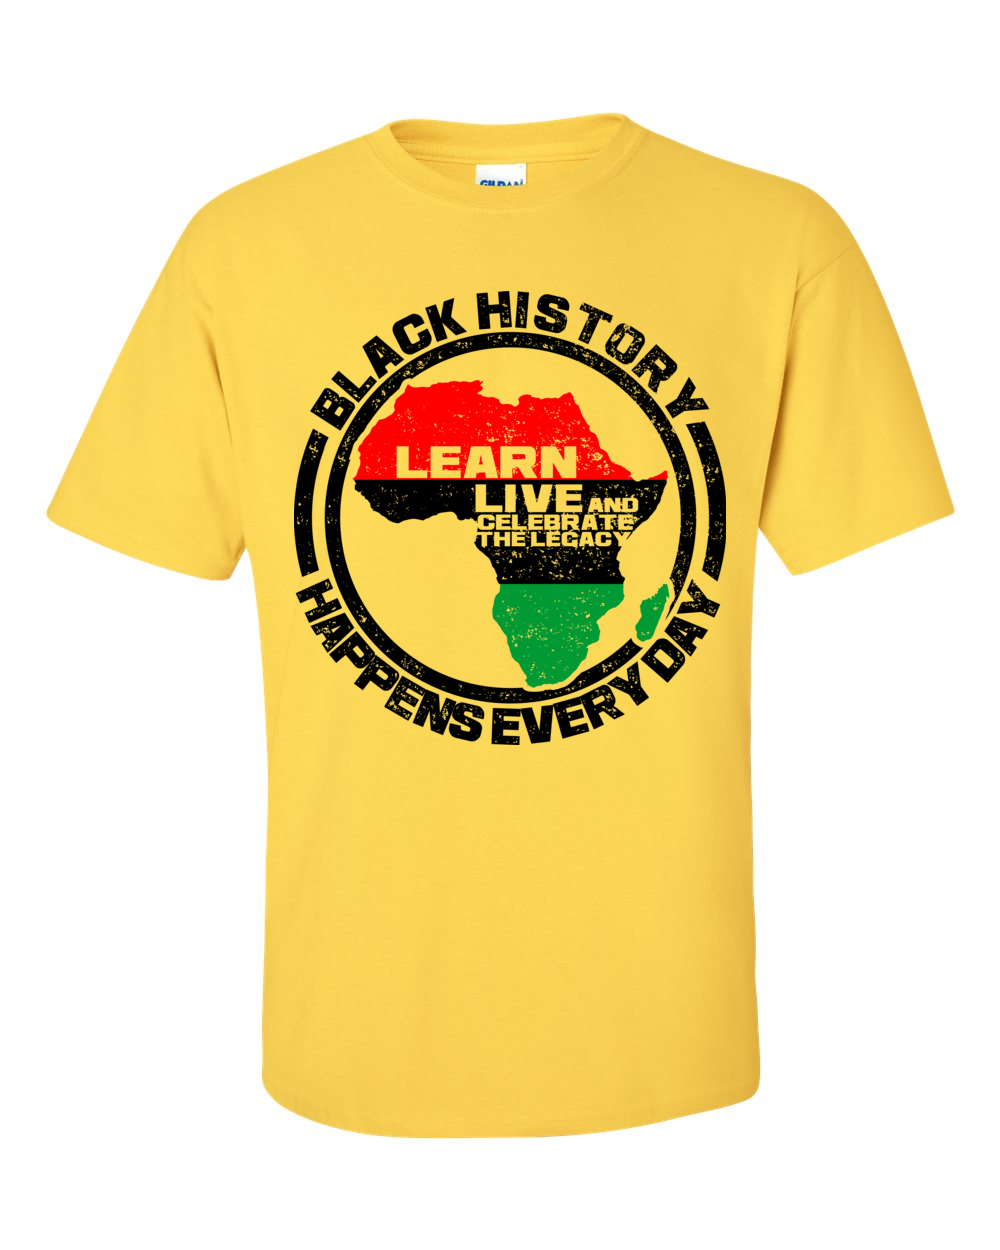 Black History Happens Everyday Short Sleeve Unisex T-Shirt-T-Shirt-RBG Forever-Small-Yellow-The Black Art Depot